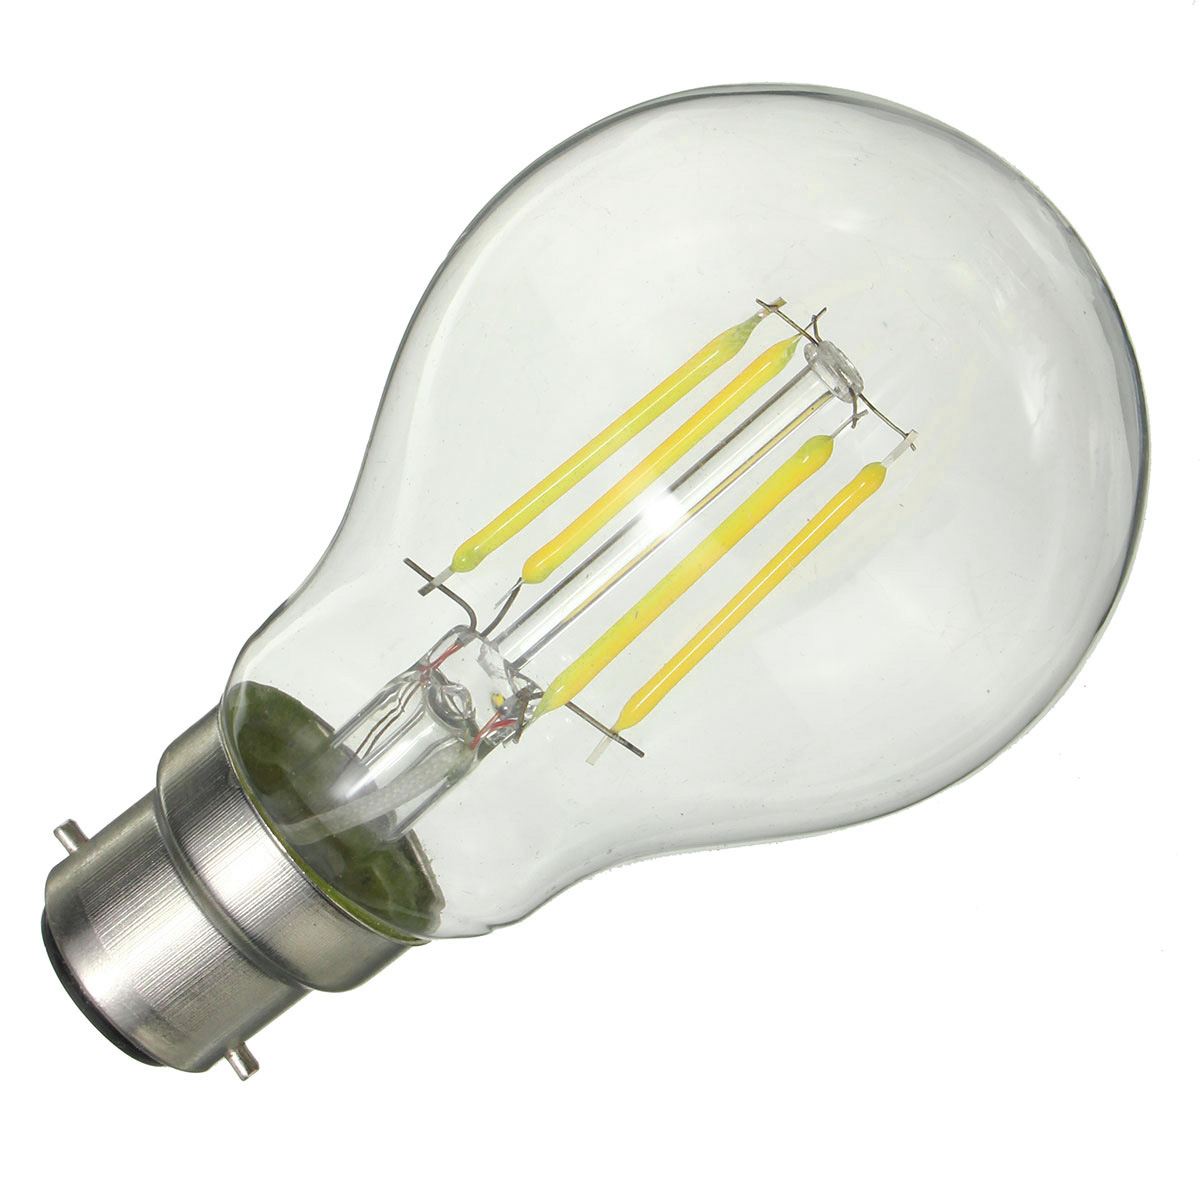 Dimmable-B22-G45-4W-Pure-White-Warm-White-COB-Retro-Vintage-Edison-Incandescent-Light-Bulb-AC220V-1063711